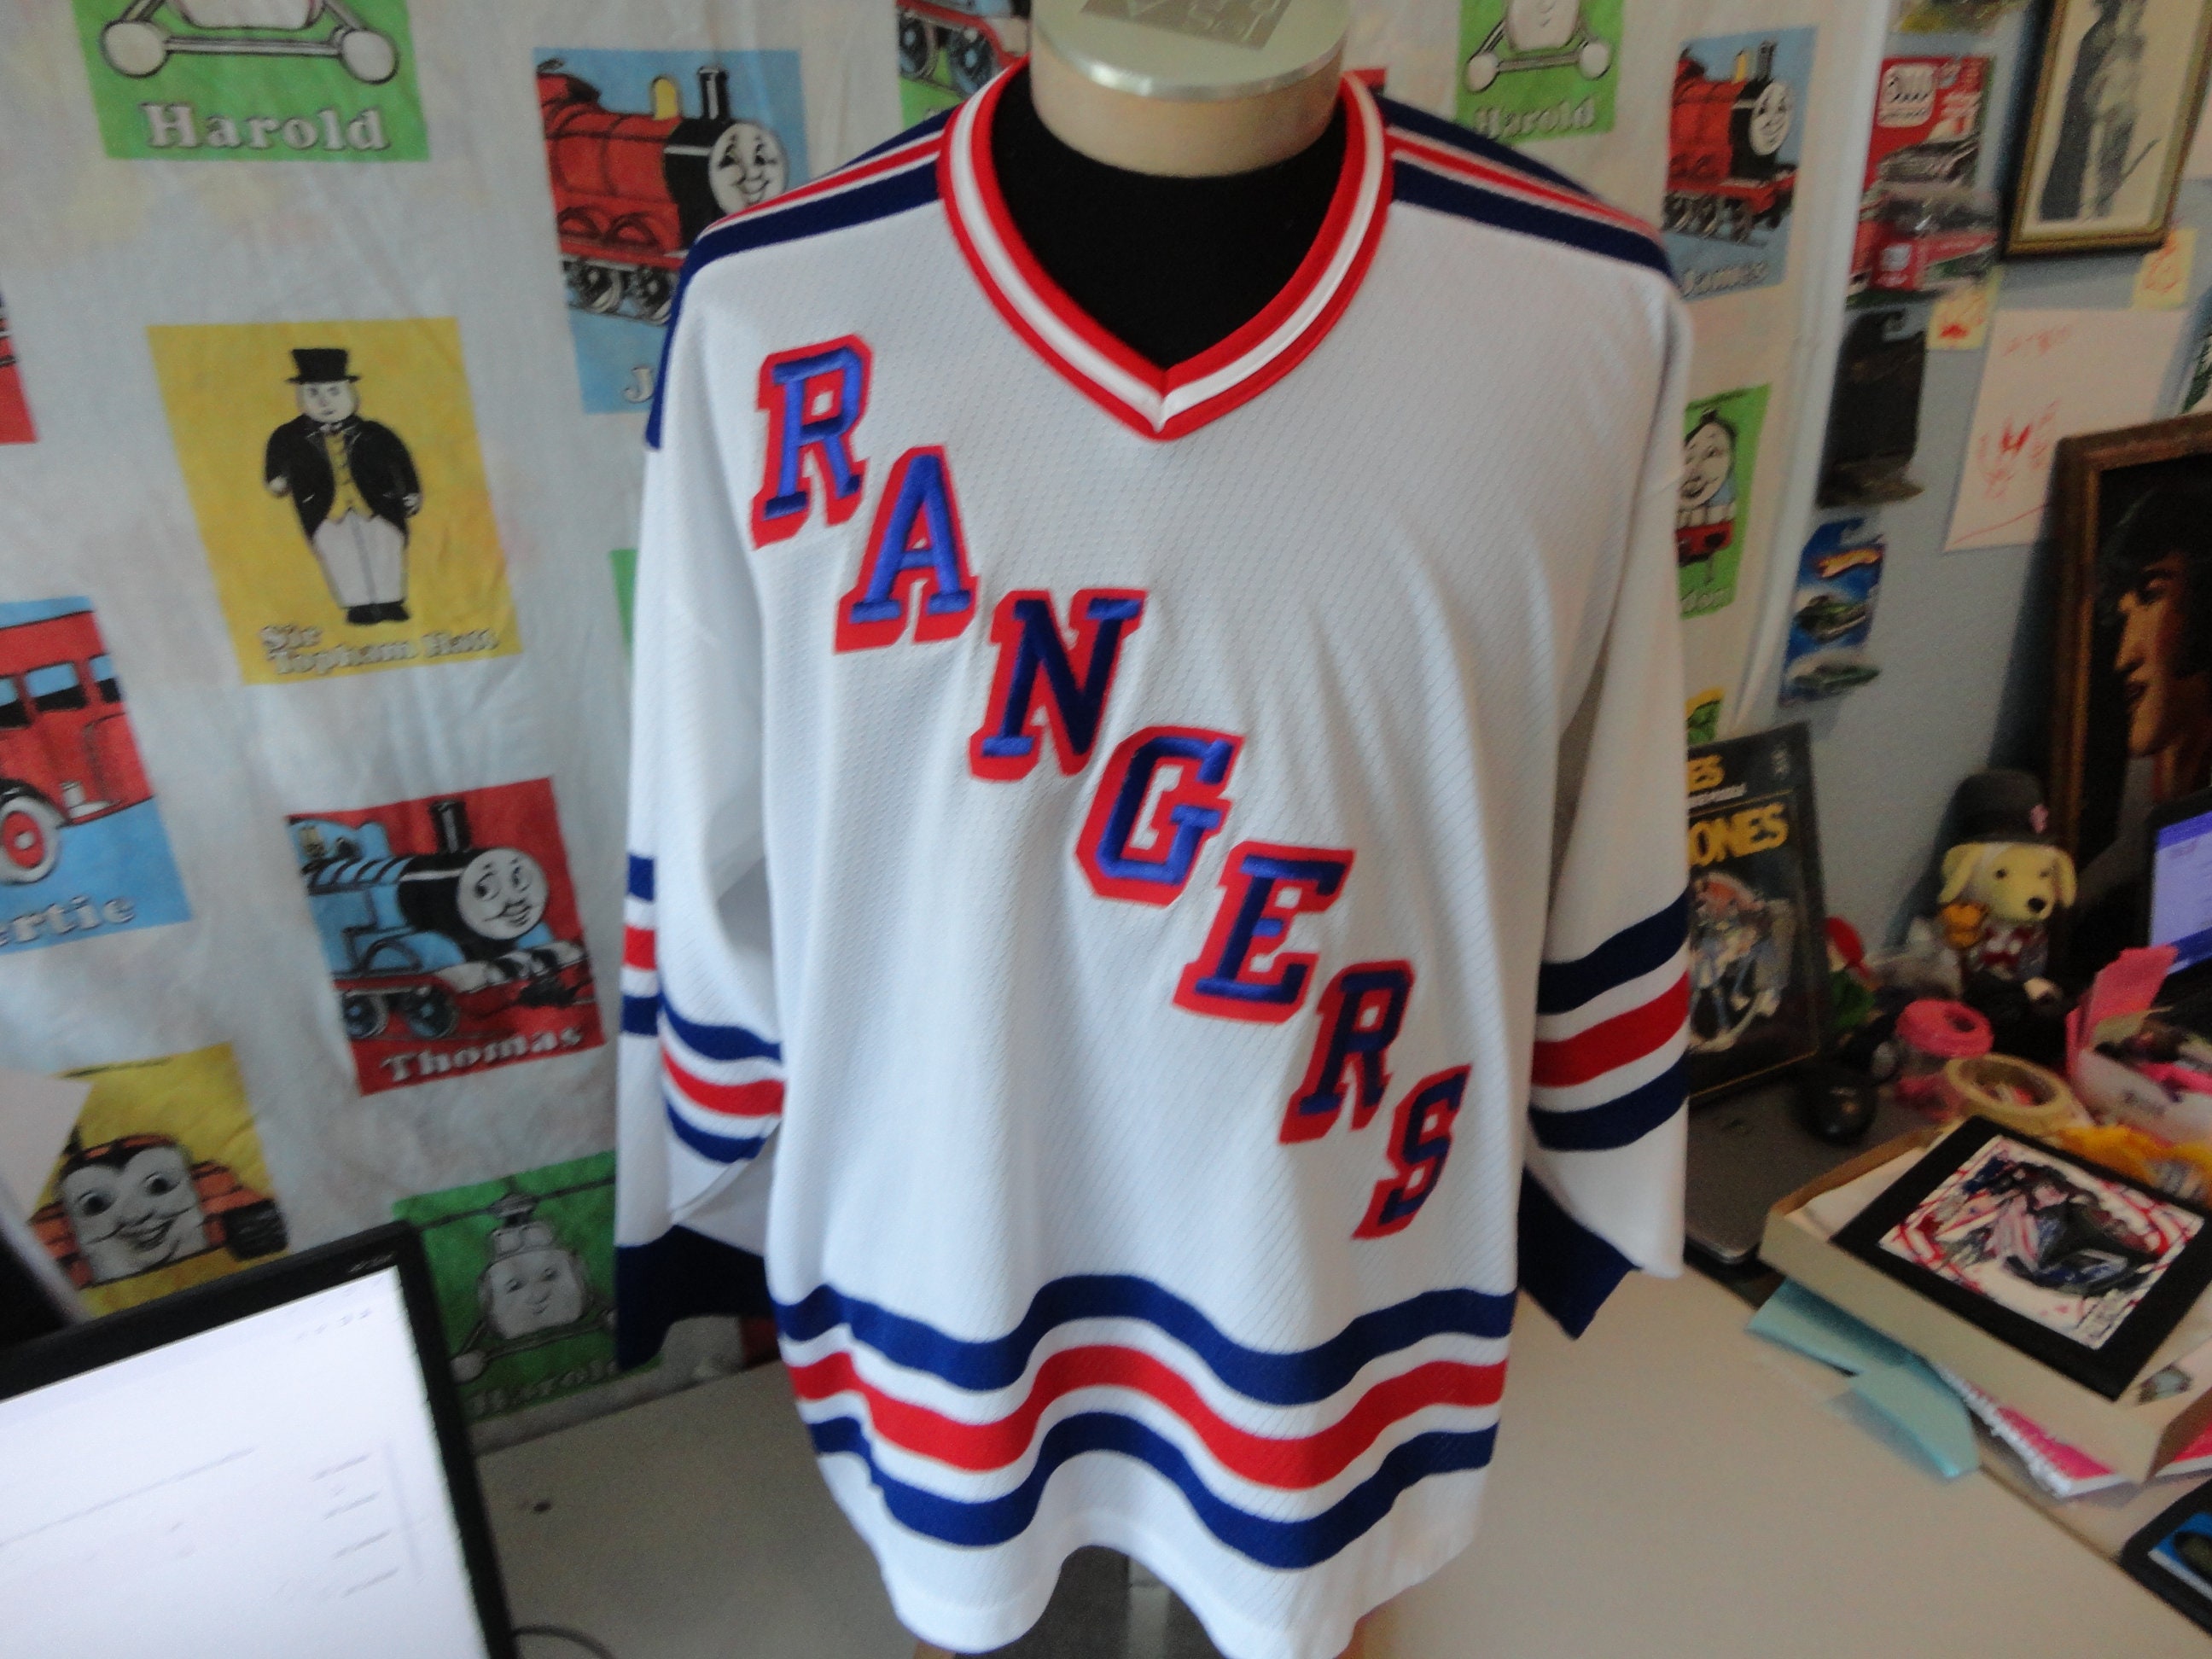 Vintage NEW YORK RANGERS NHL CCM Jersey XL – XL3 VINTAGE CLOTHING